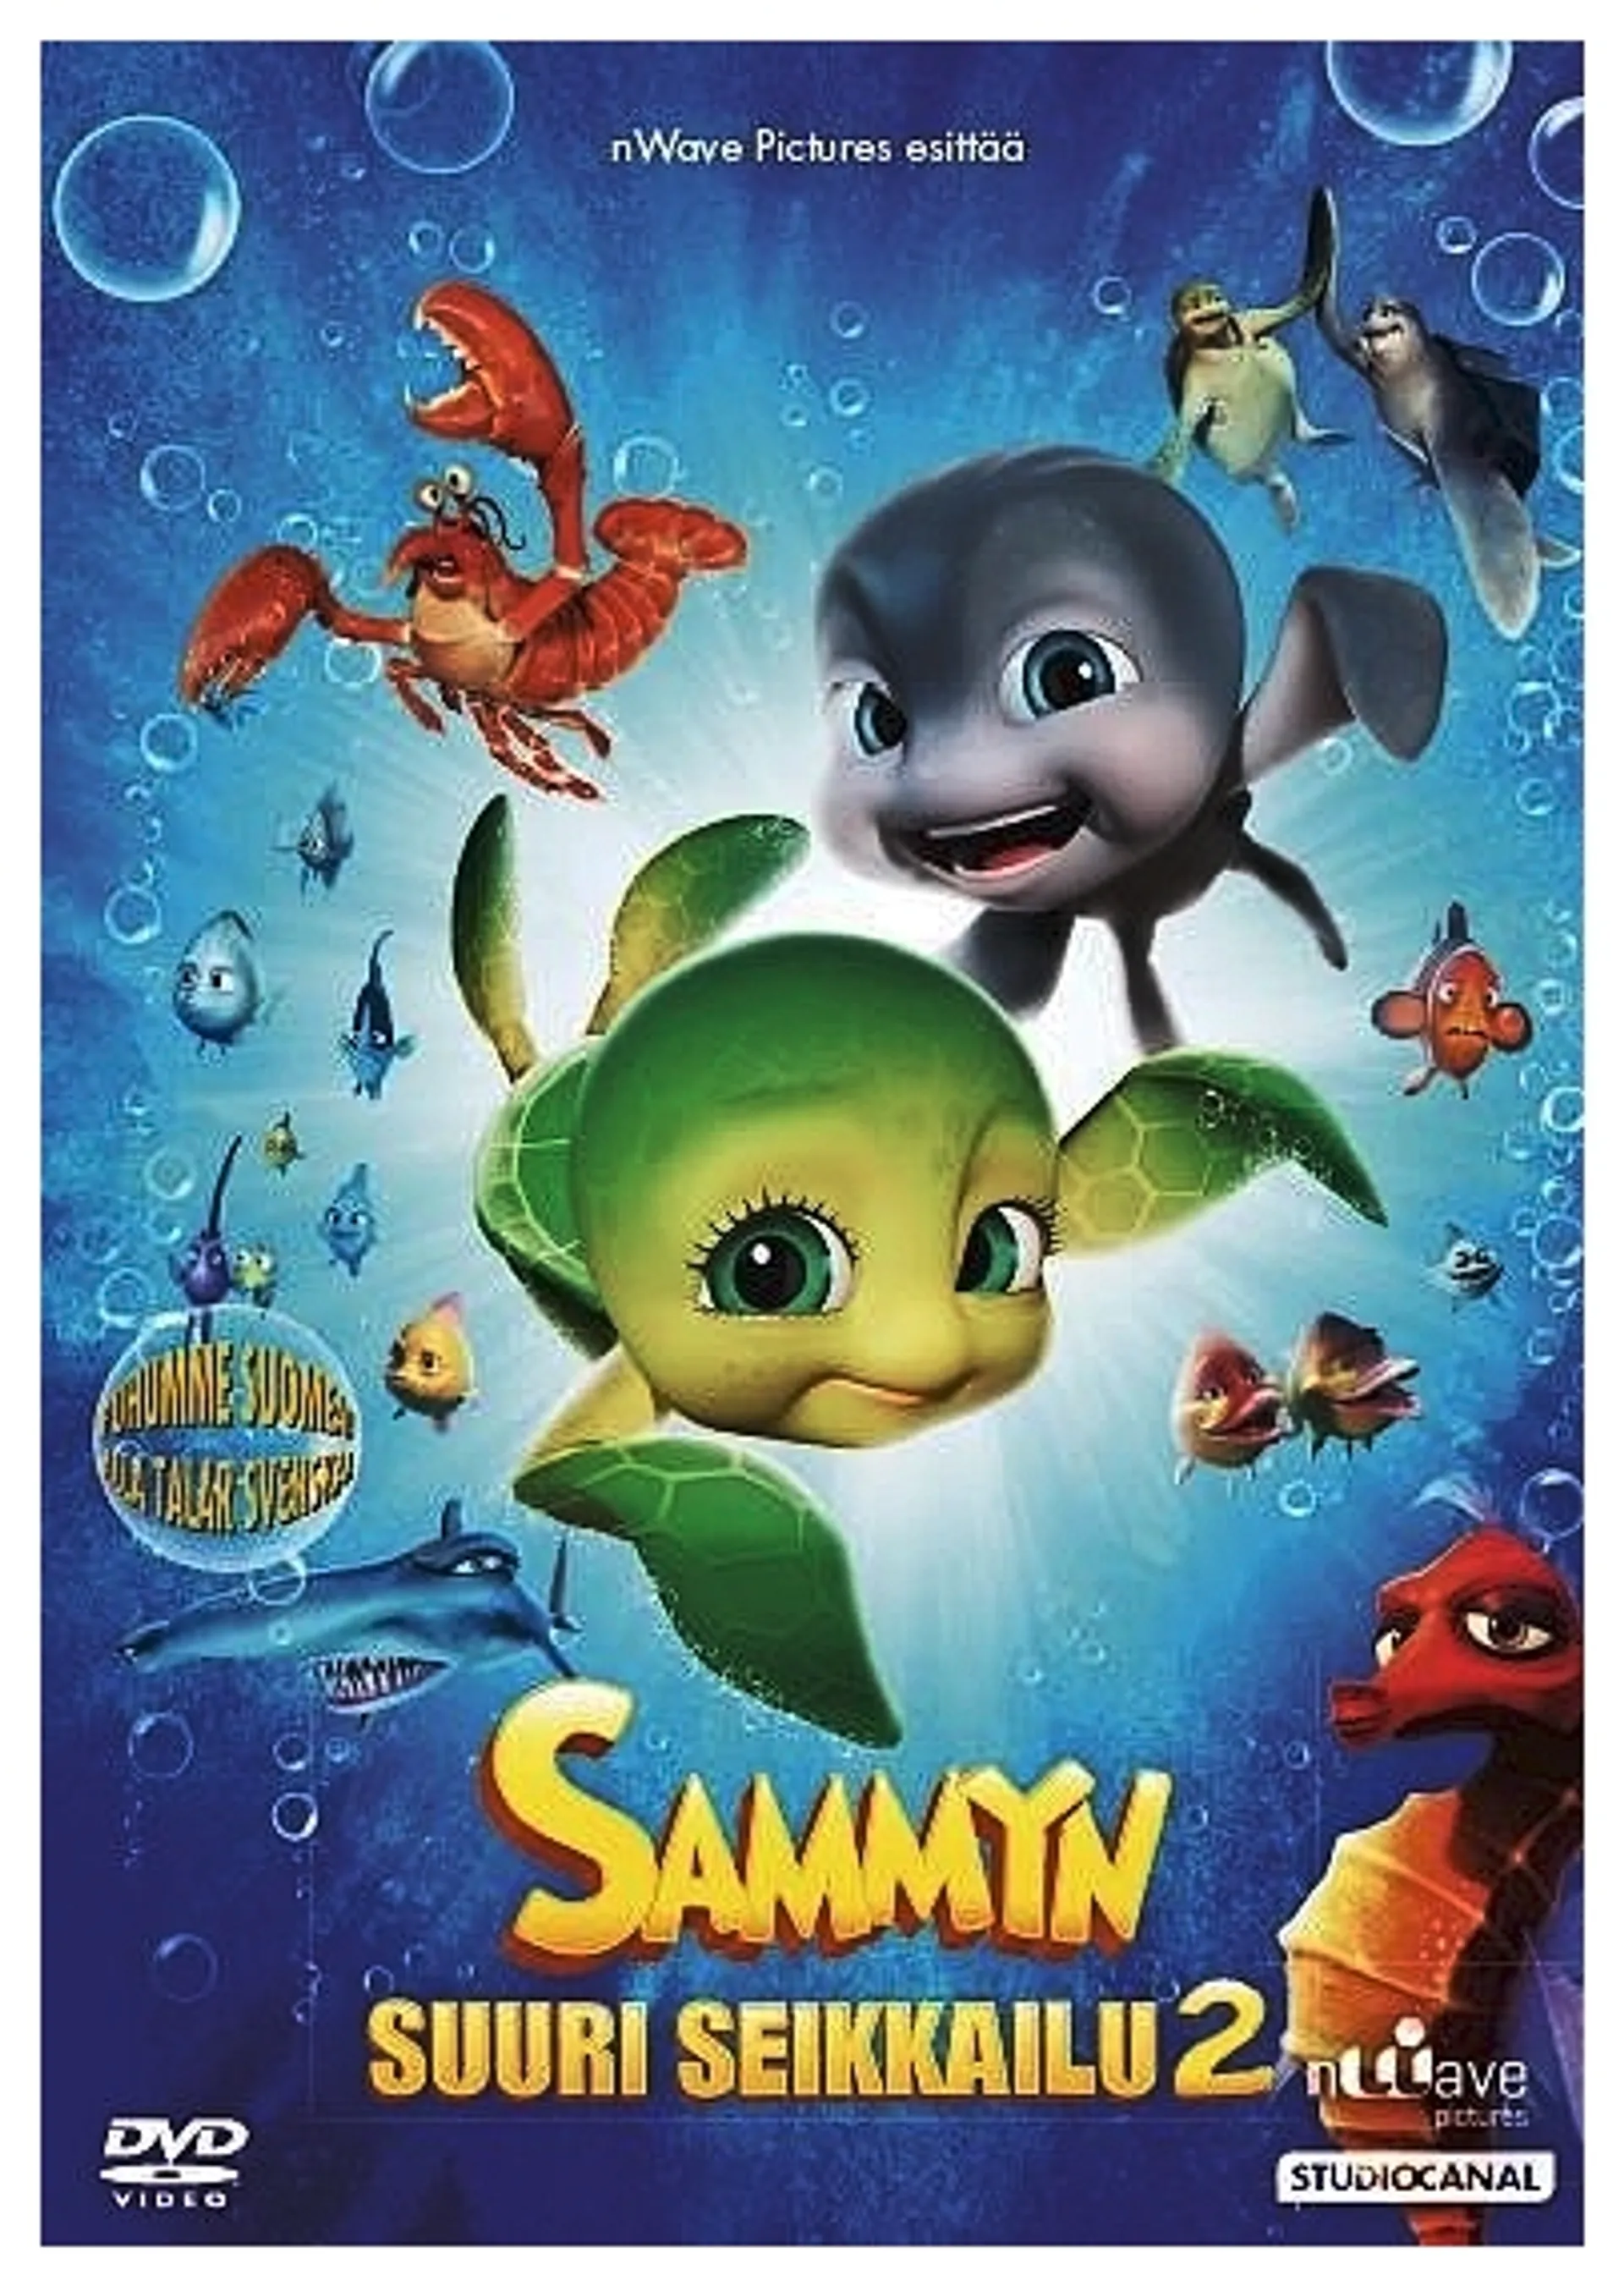 SF Film dvd Sammyn Suuri Seikkailu 2